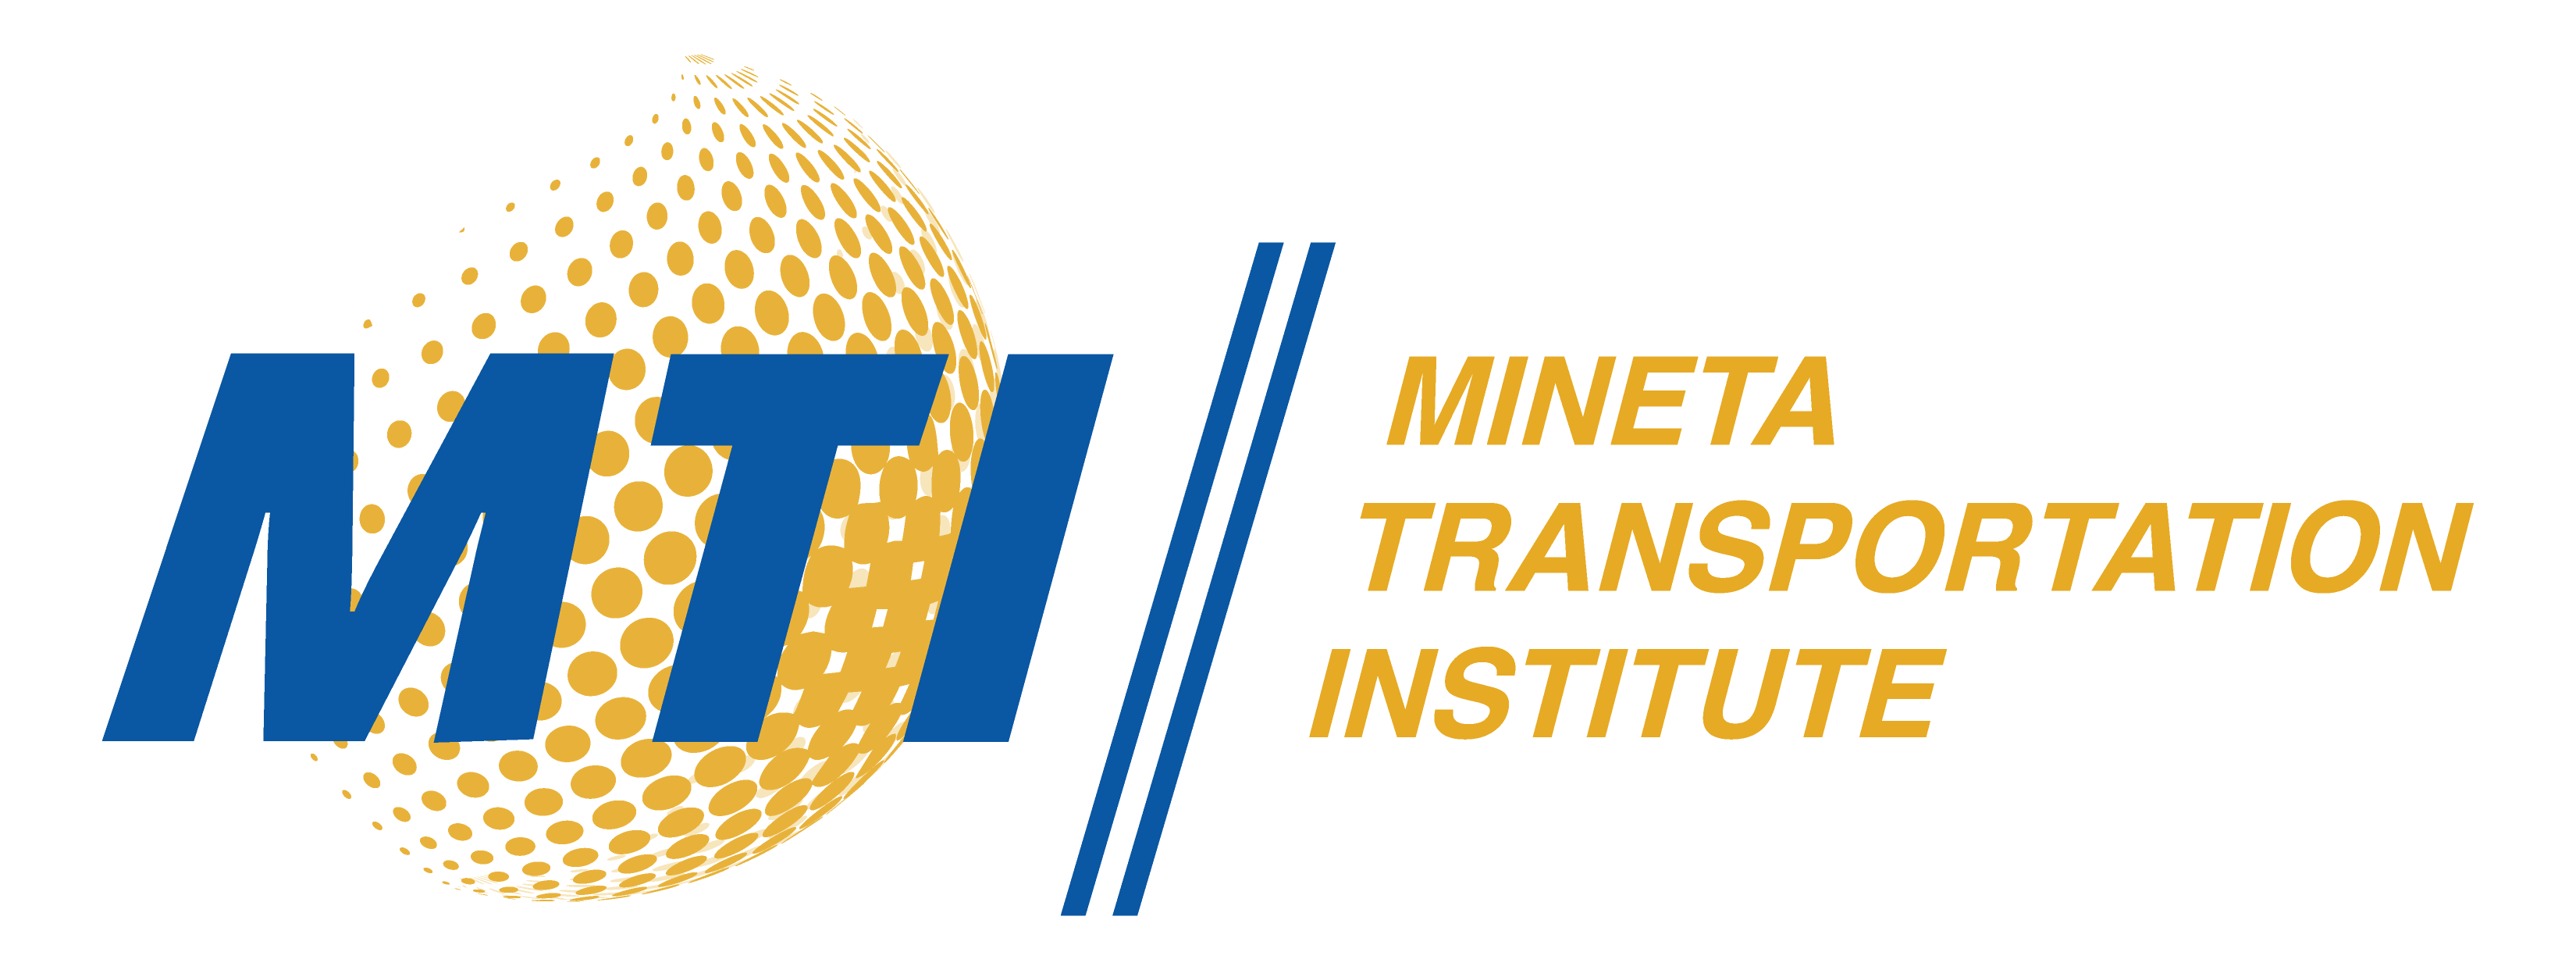 Mineta Transportation Institute